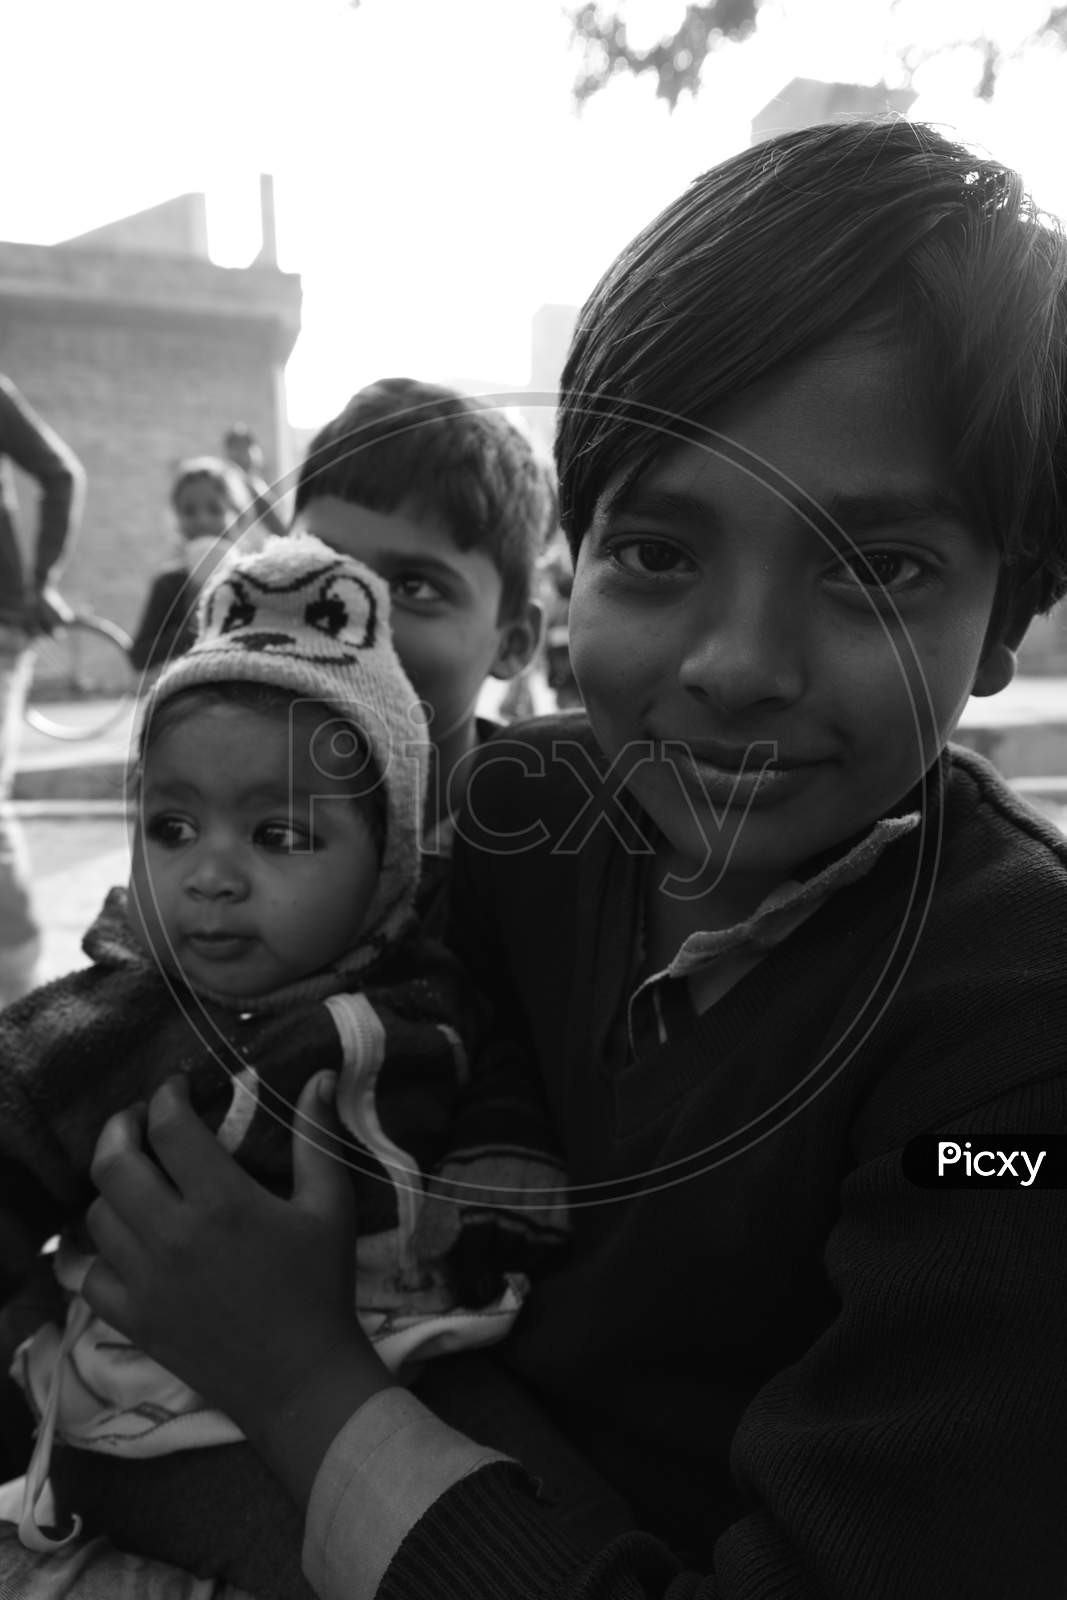 Children Playing In Indian Rural Villages